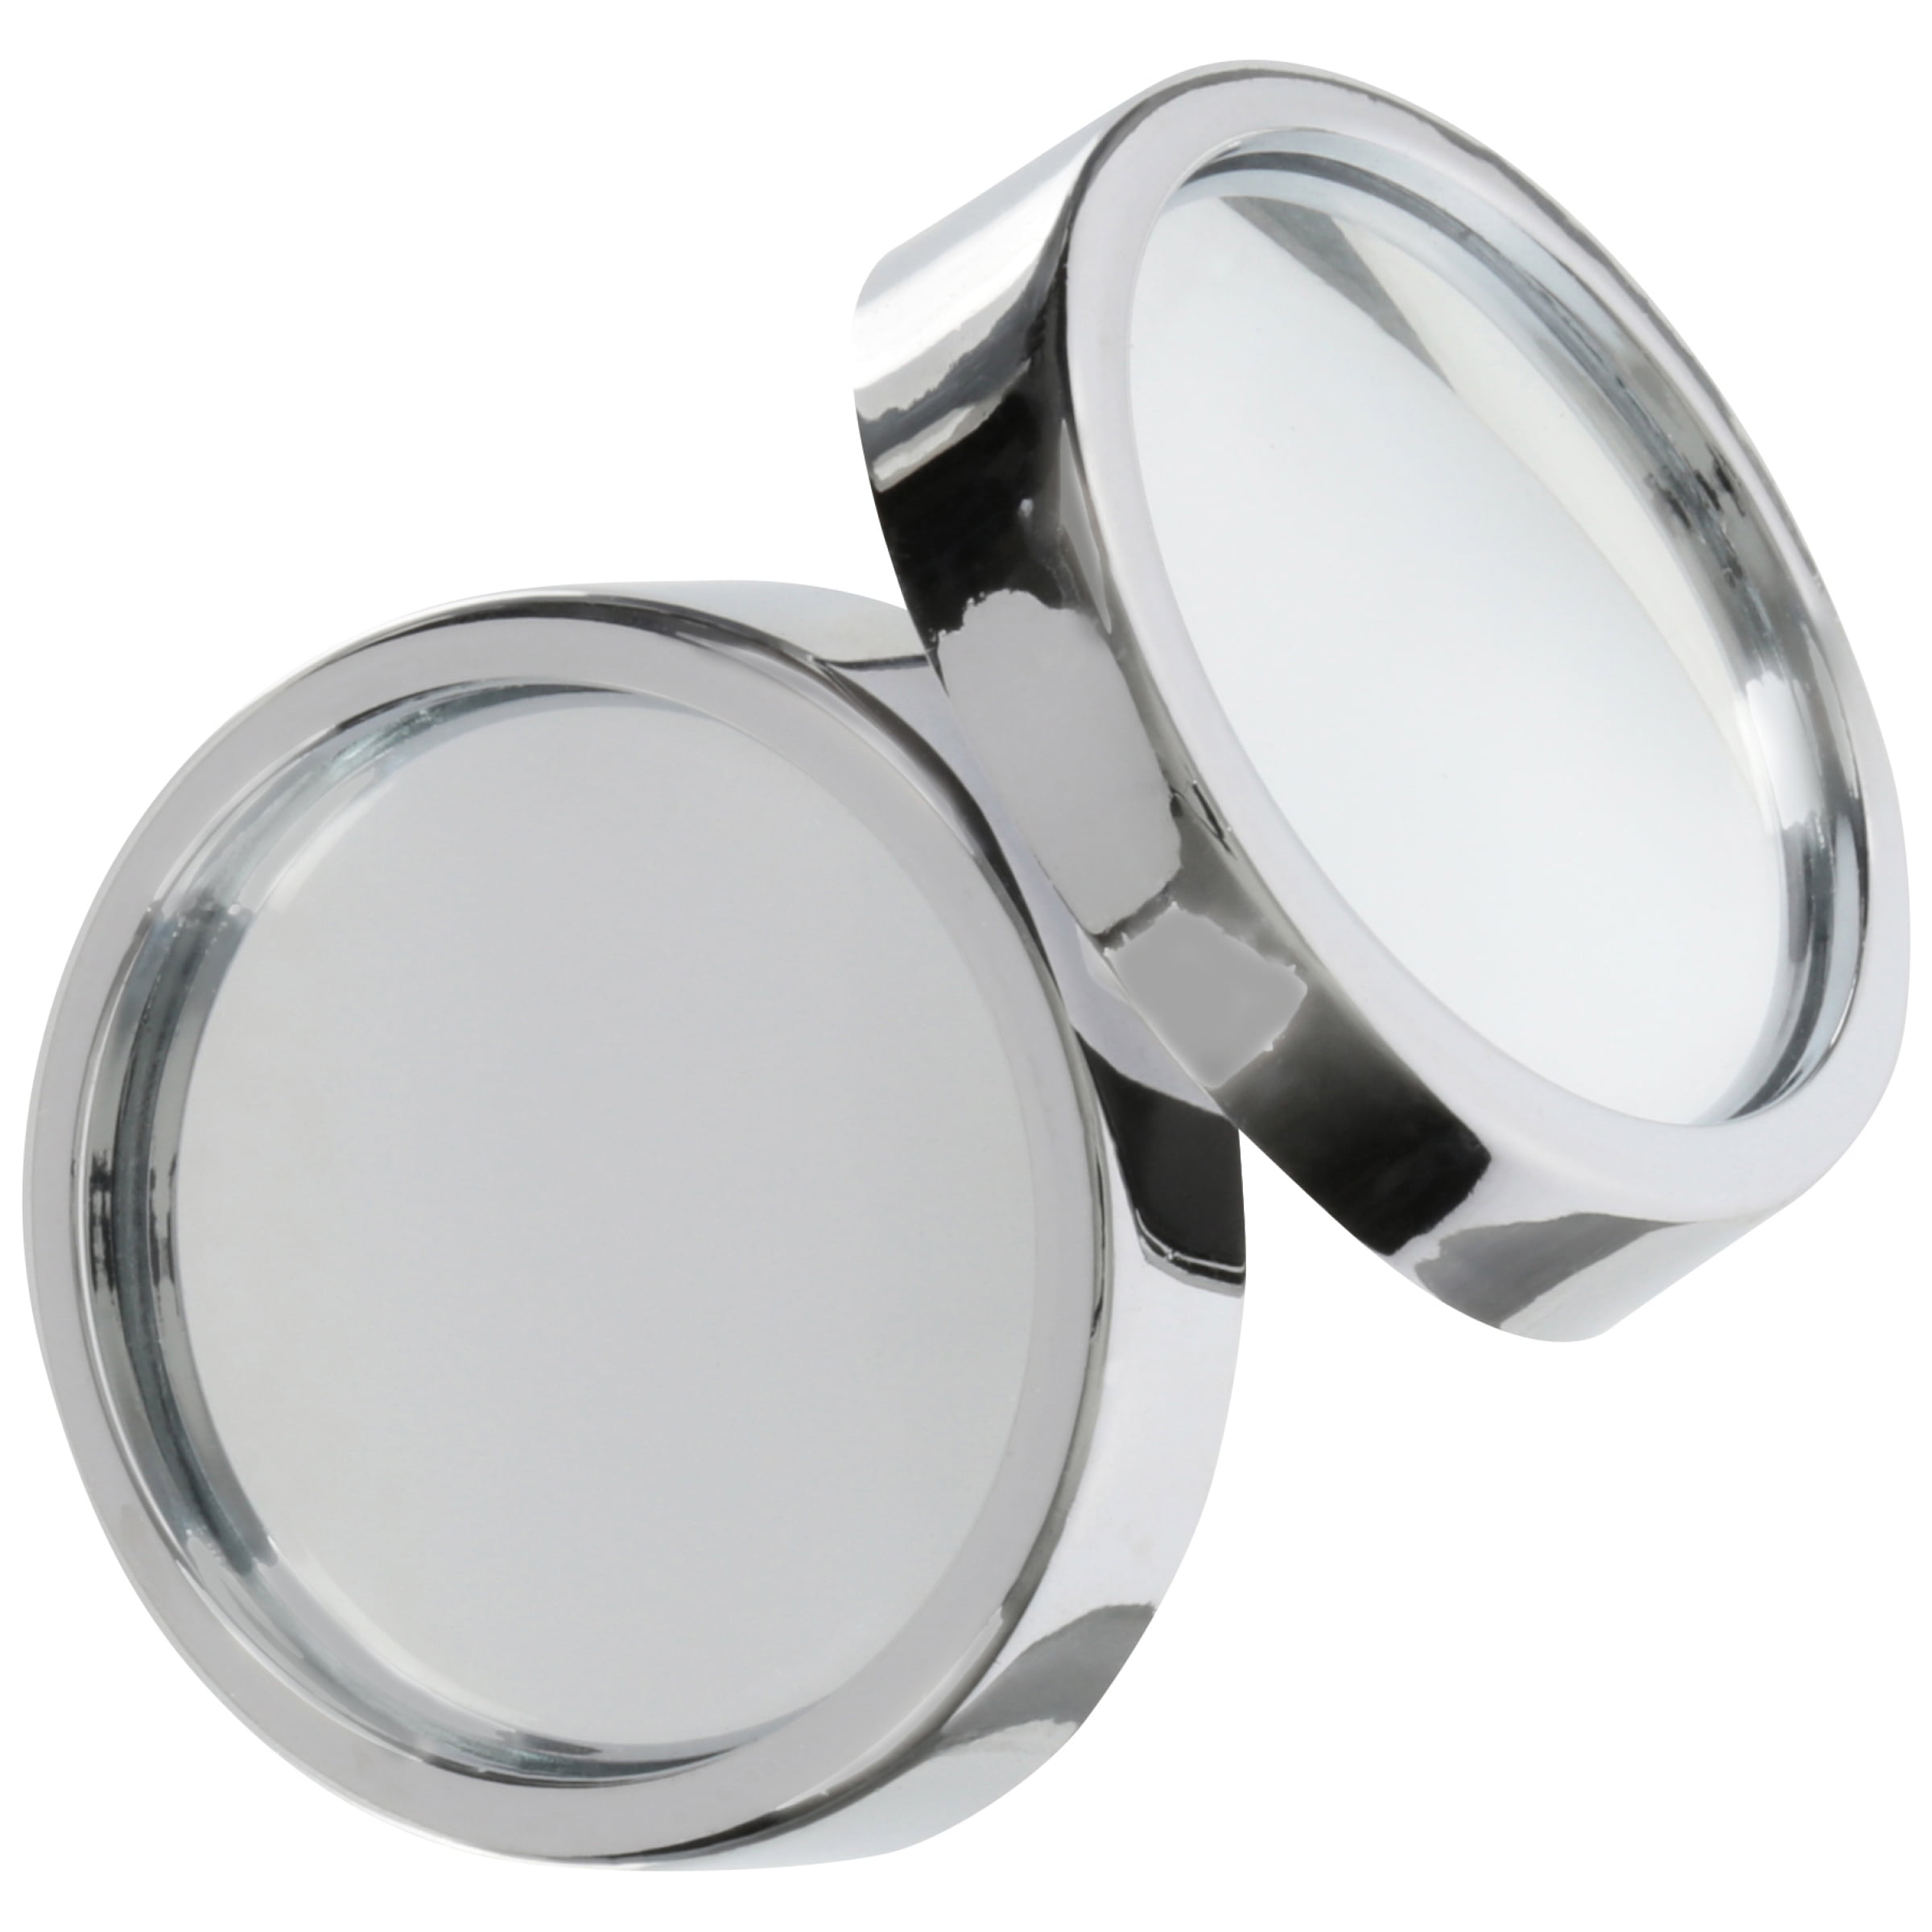 Auto Drive 2 Piece Round Adjustable Blind Spot Mirrors Chrome, 71172W